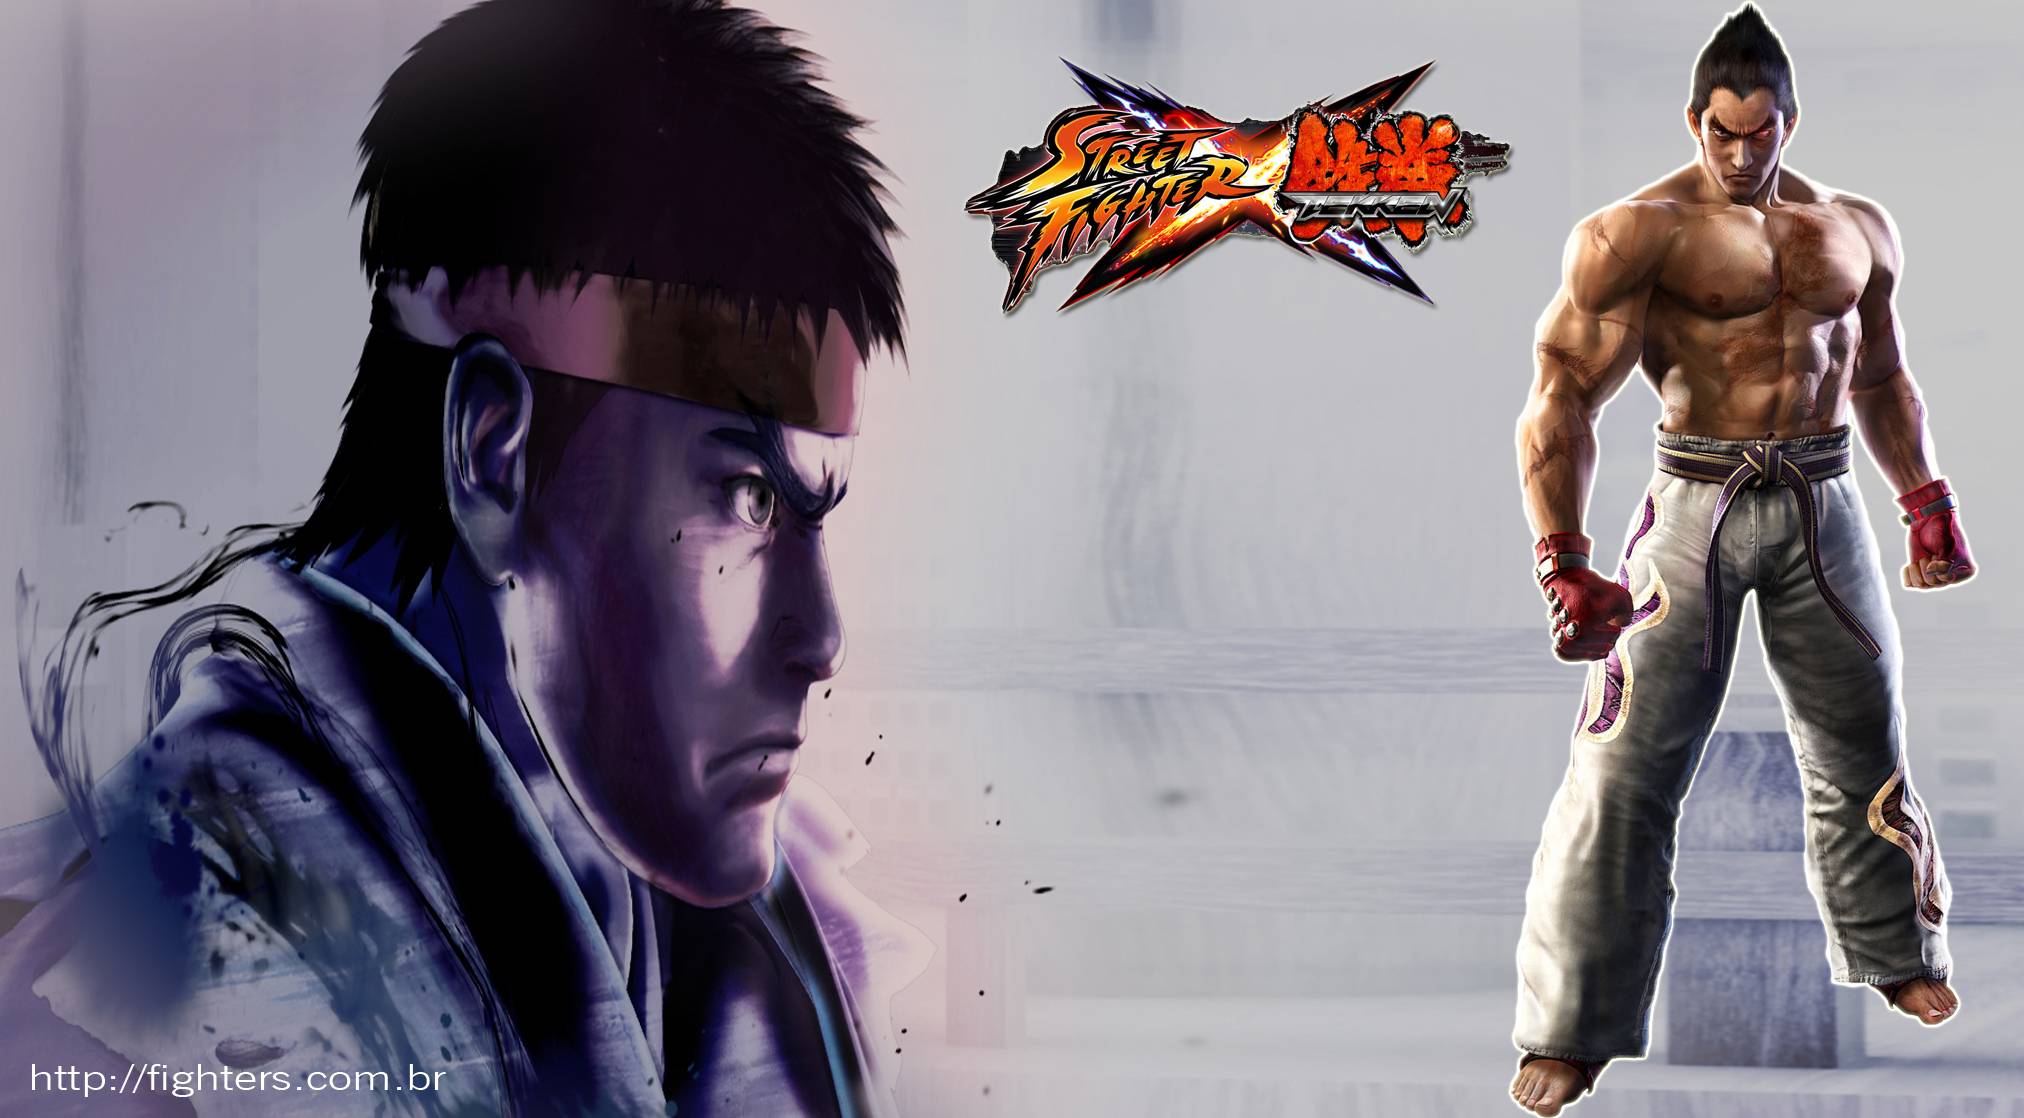 Street Fighter X Tekken Wallpapers in HD GamingBoltcom Video Game 2024x1118